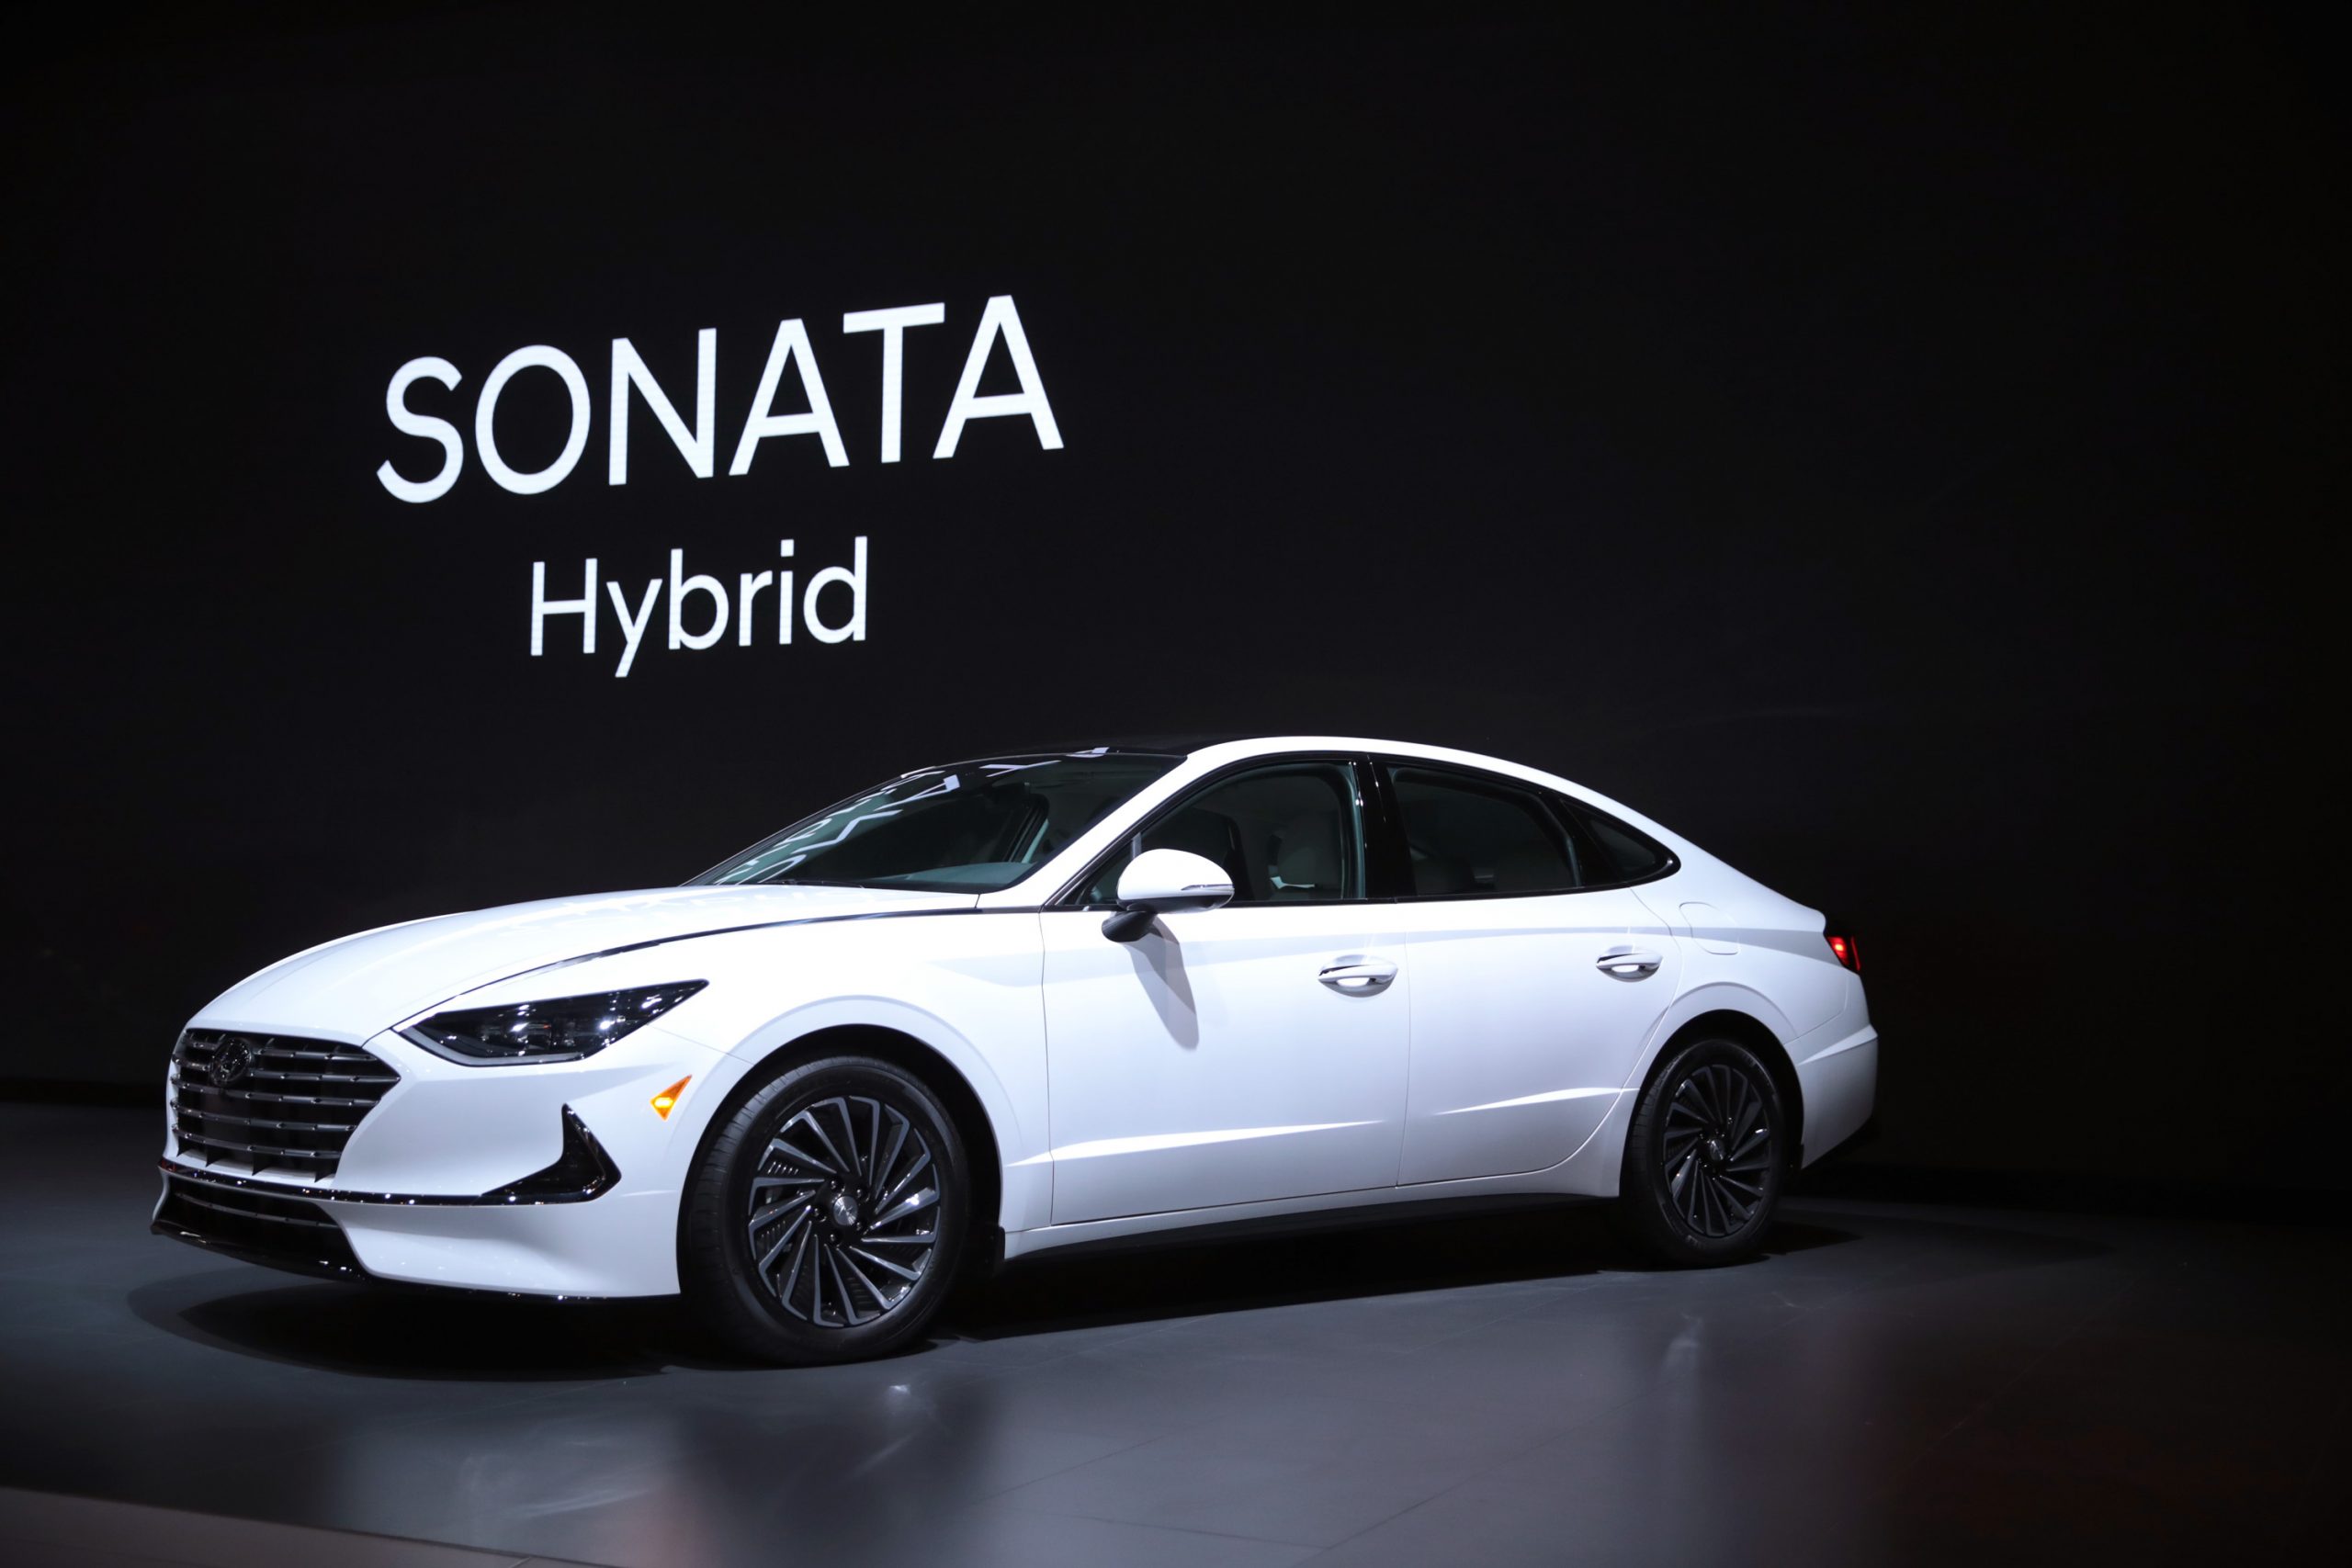 Hyundai shows off their white 2020 Hyundai Sonata Hybrid at the Chicago Auto Show